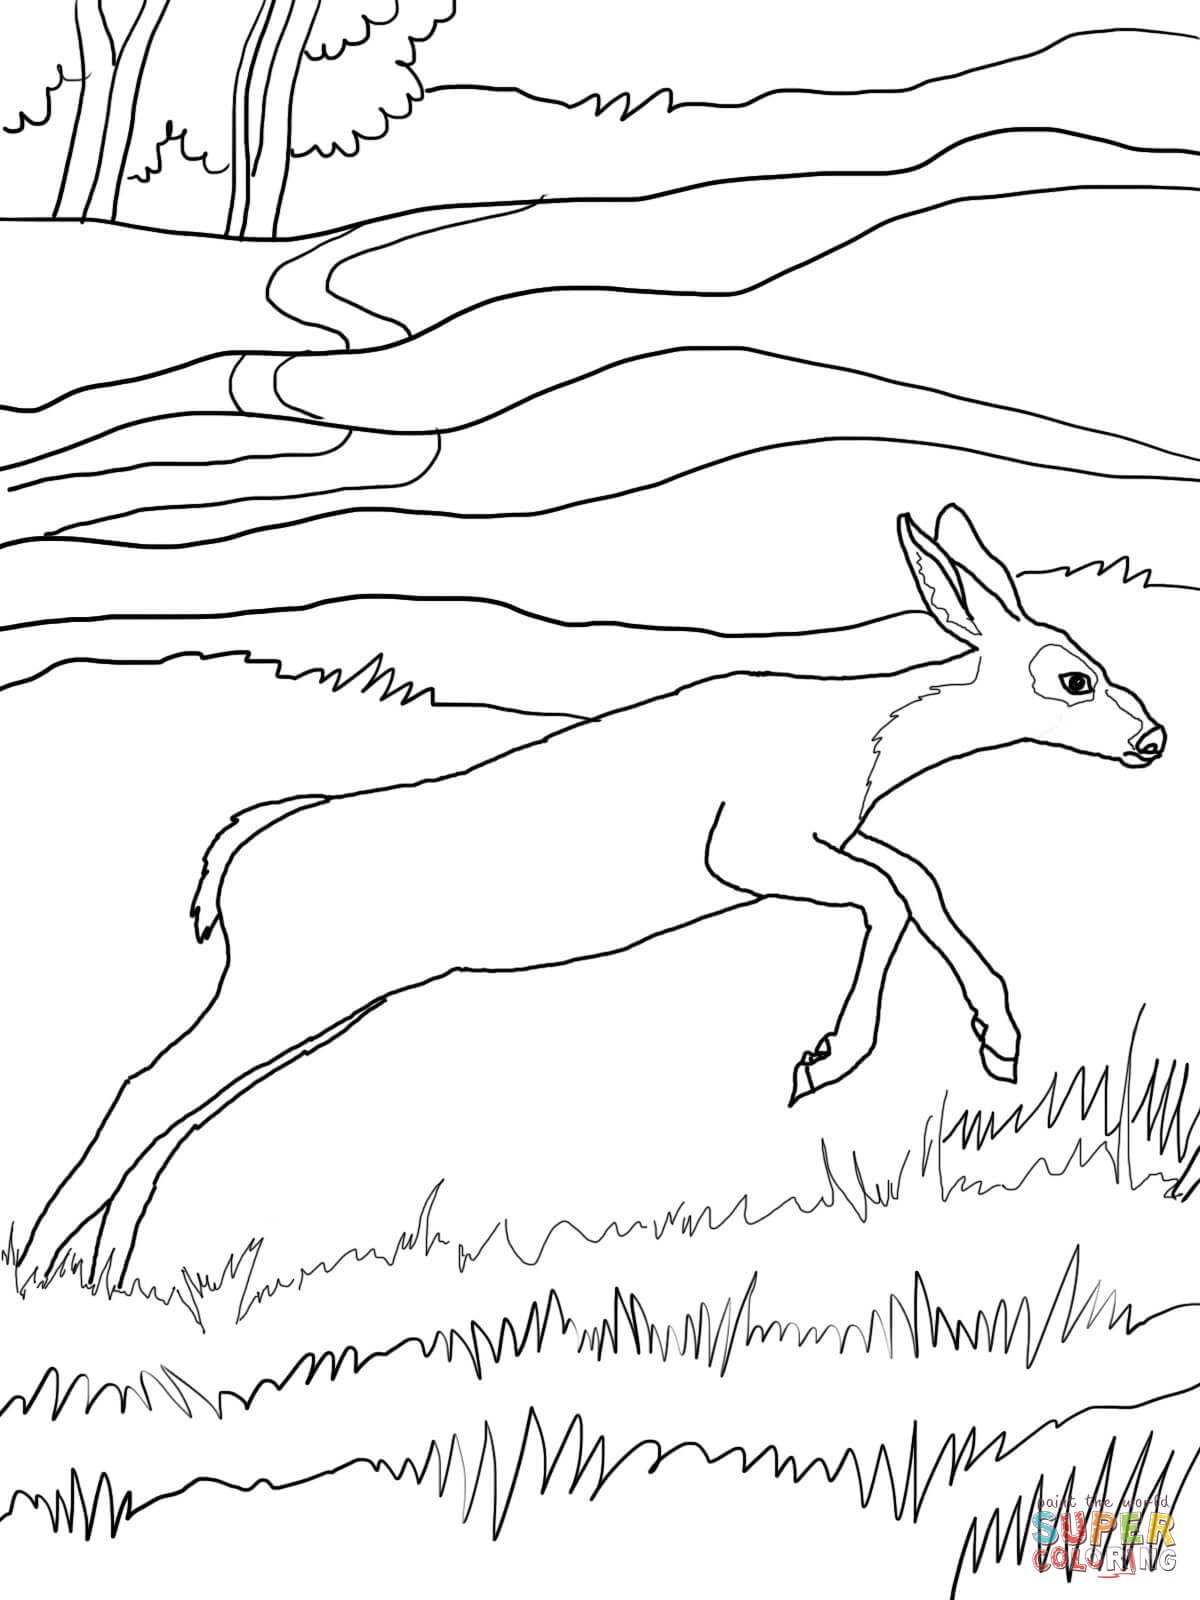 Mule Deer Baby coloring page | Free Printable Coloring Pages